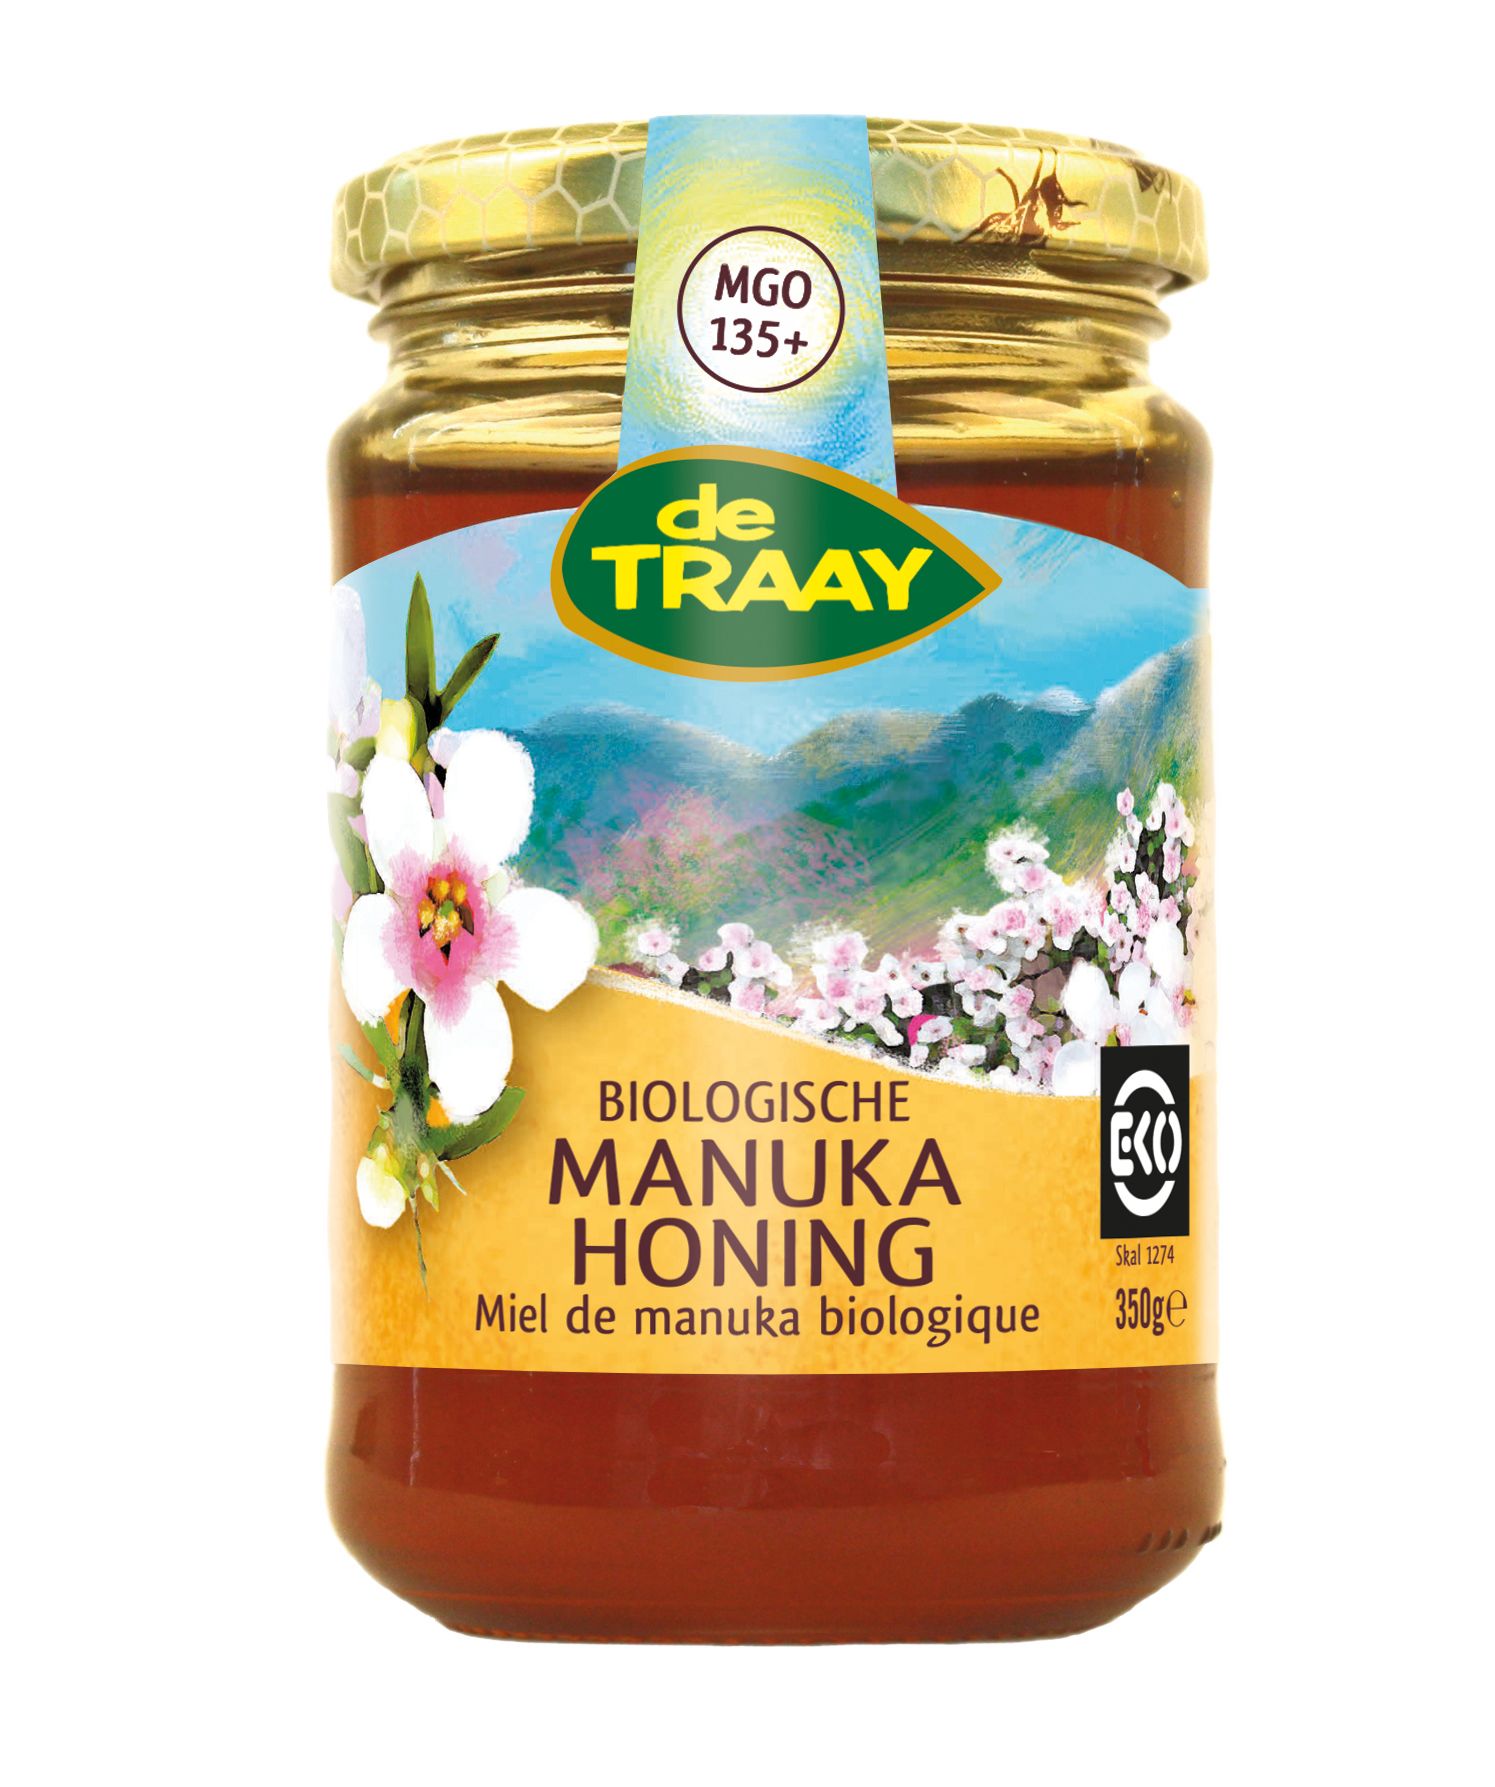 Manuka honing (bio)